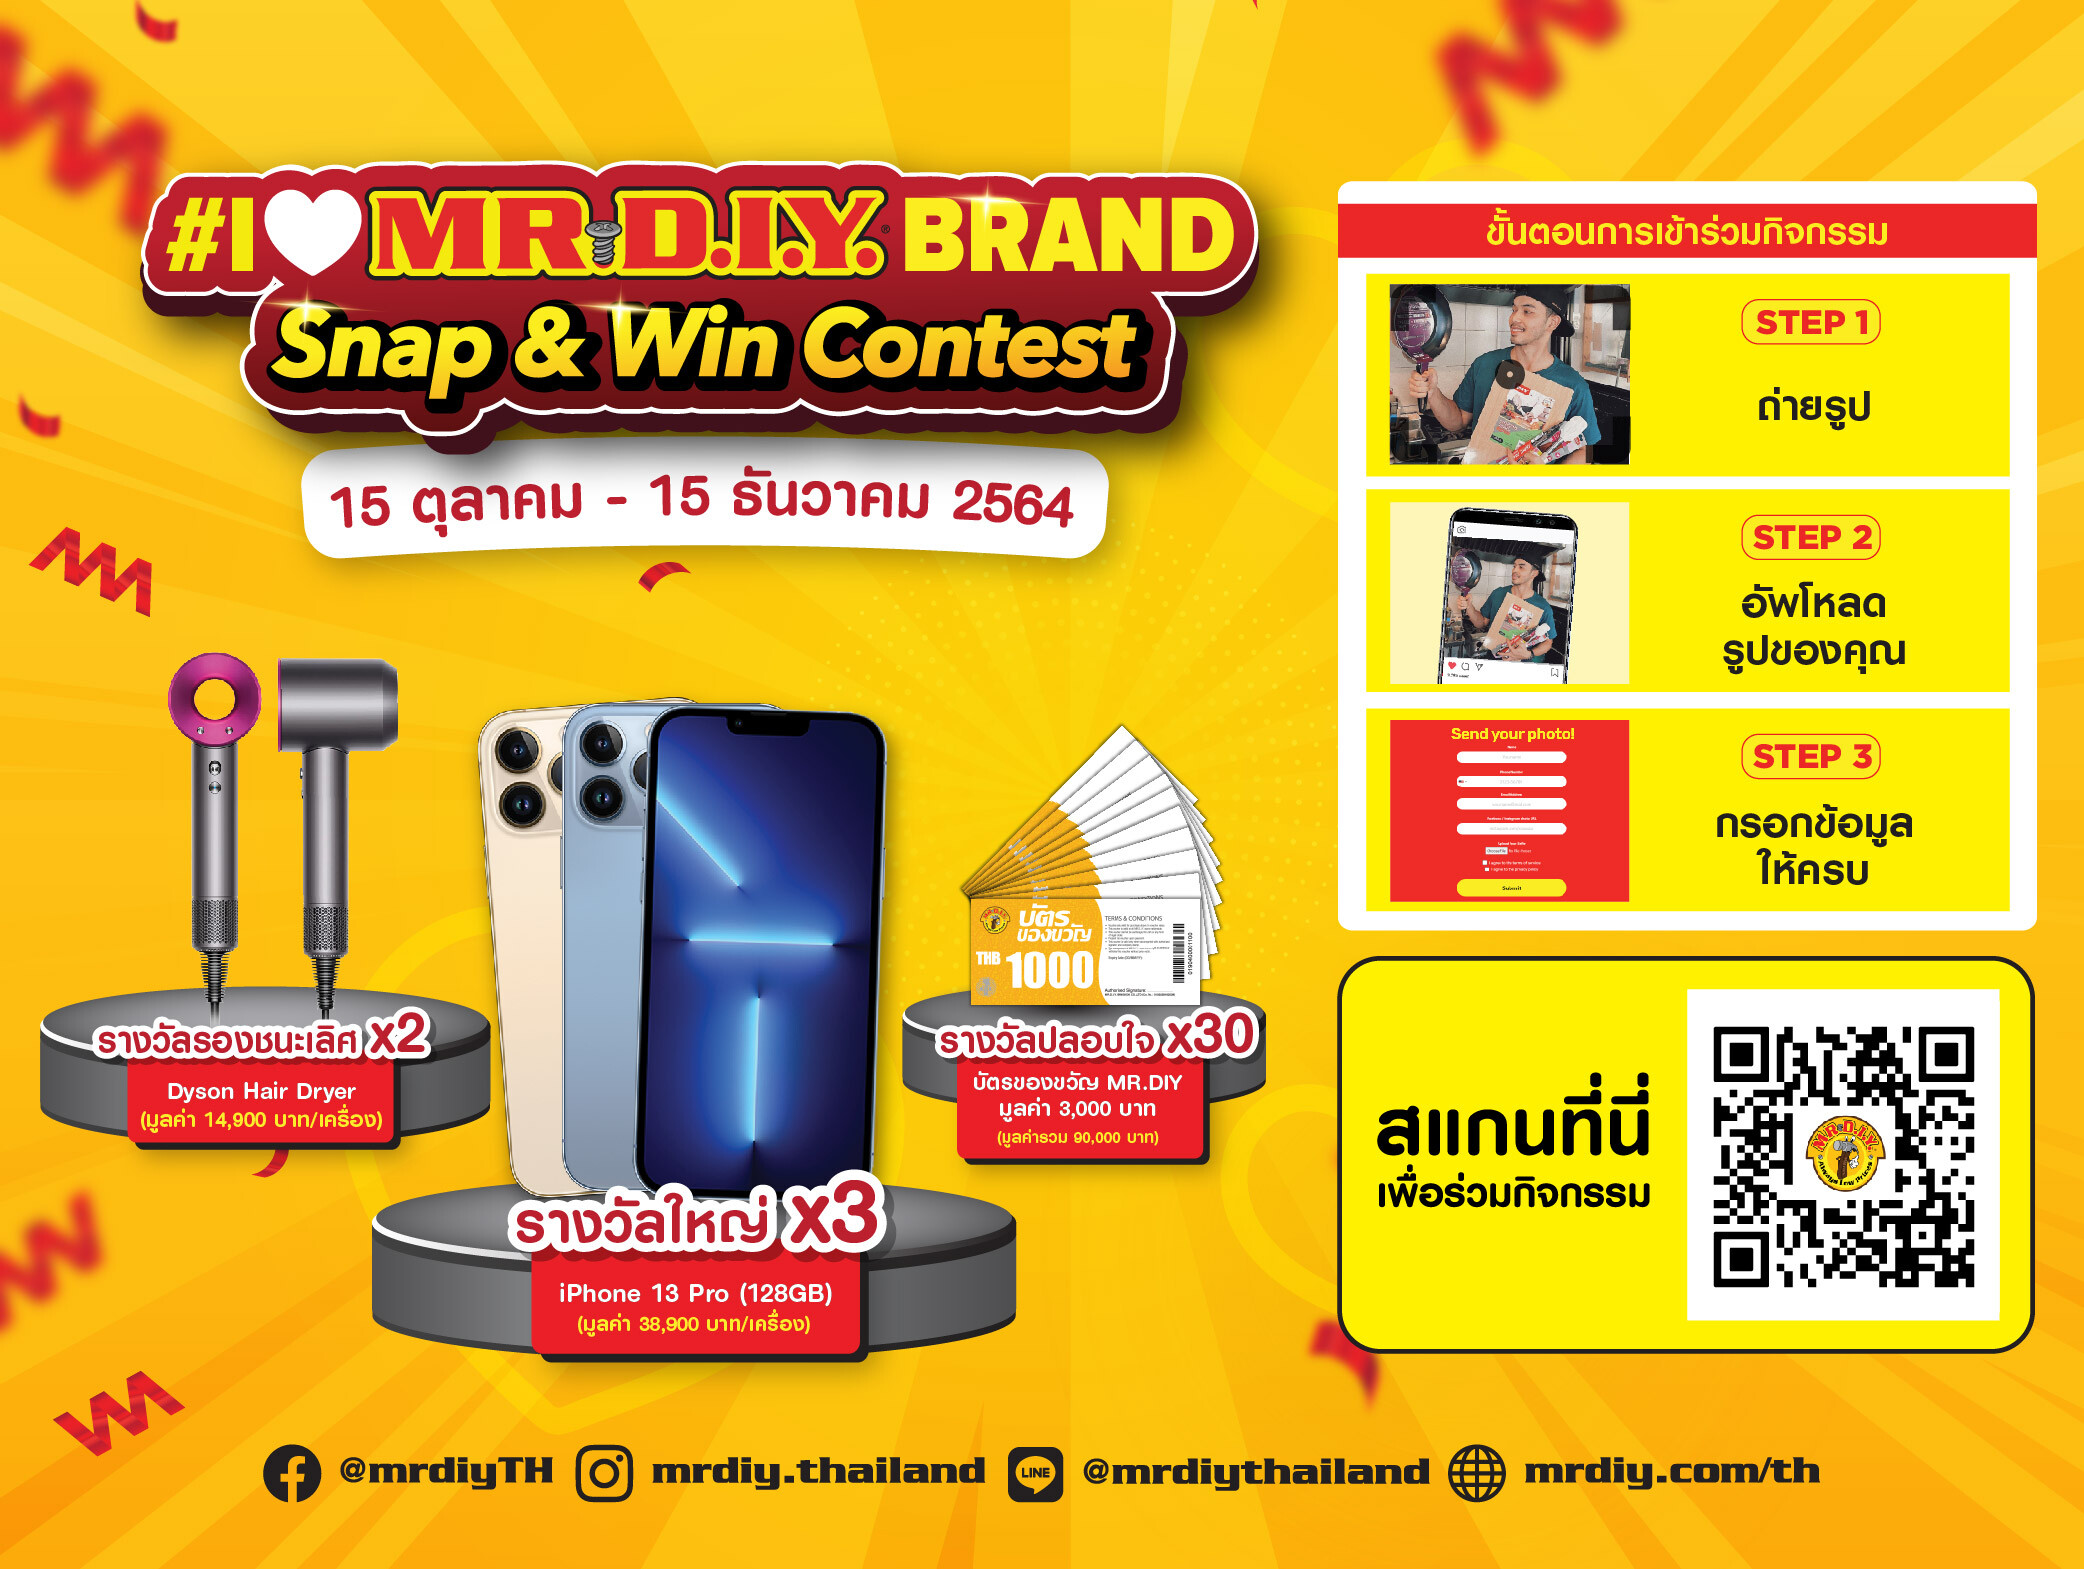 MR.DIY "Snap & Win" ชวนแชะภาพสุดครีเอท ชิงรางวัลใหญ่ iPhone 13 pro พร้อมของรางวัลรวมมูลค่ากว่า 236,000 บาท